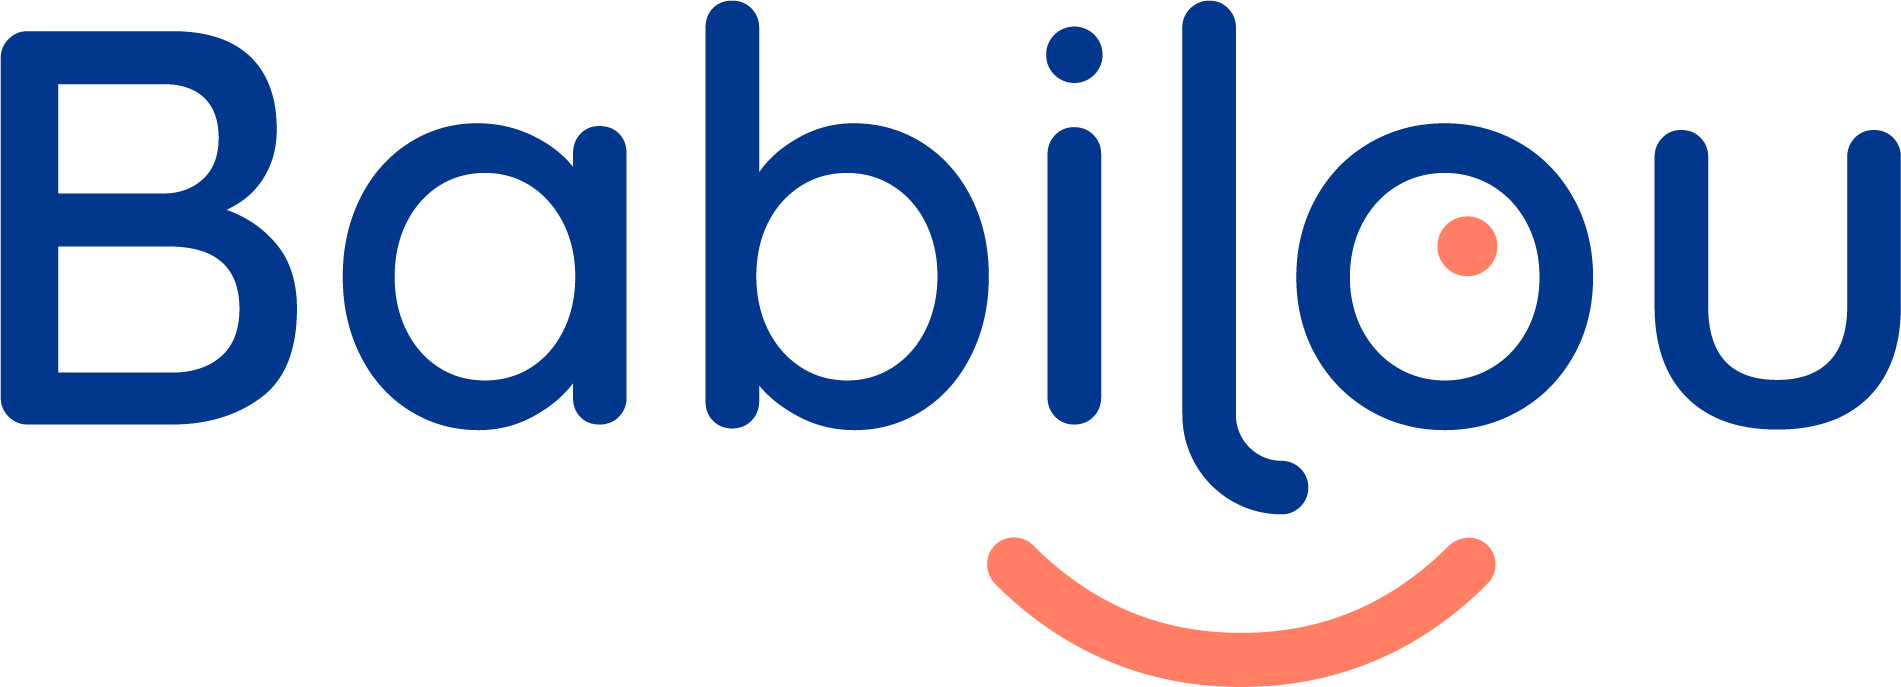 __sitelogo__nouveau-logo-babilou-bleu.png